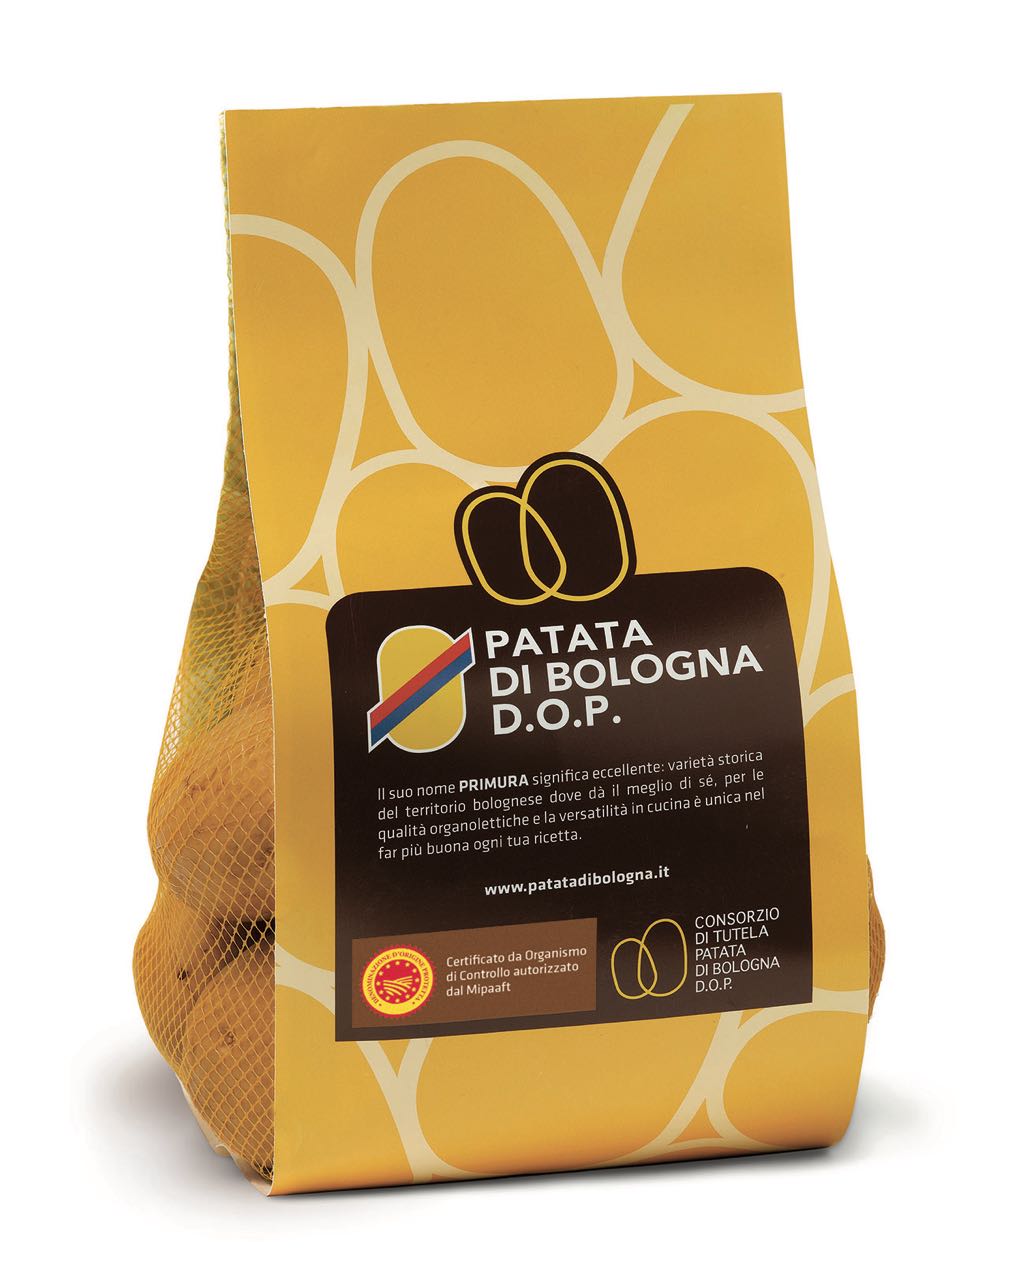 Patata-di-Bologna-DOP_pack (1).jpg